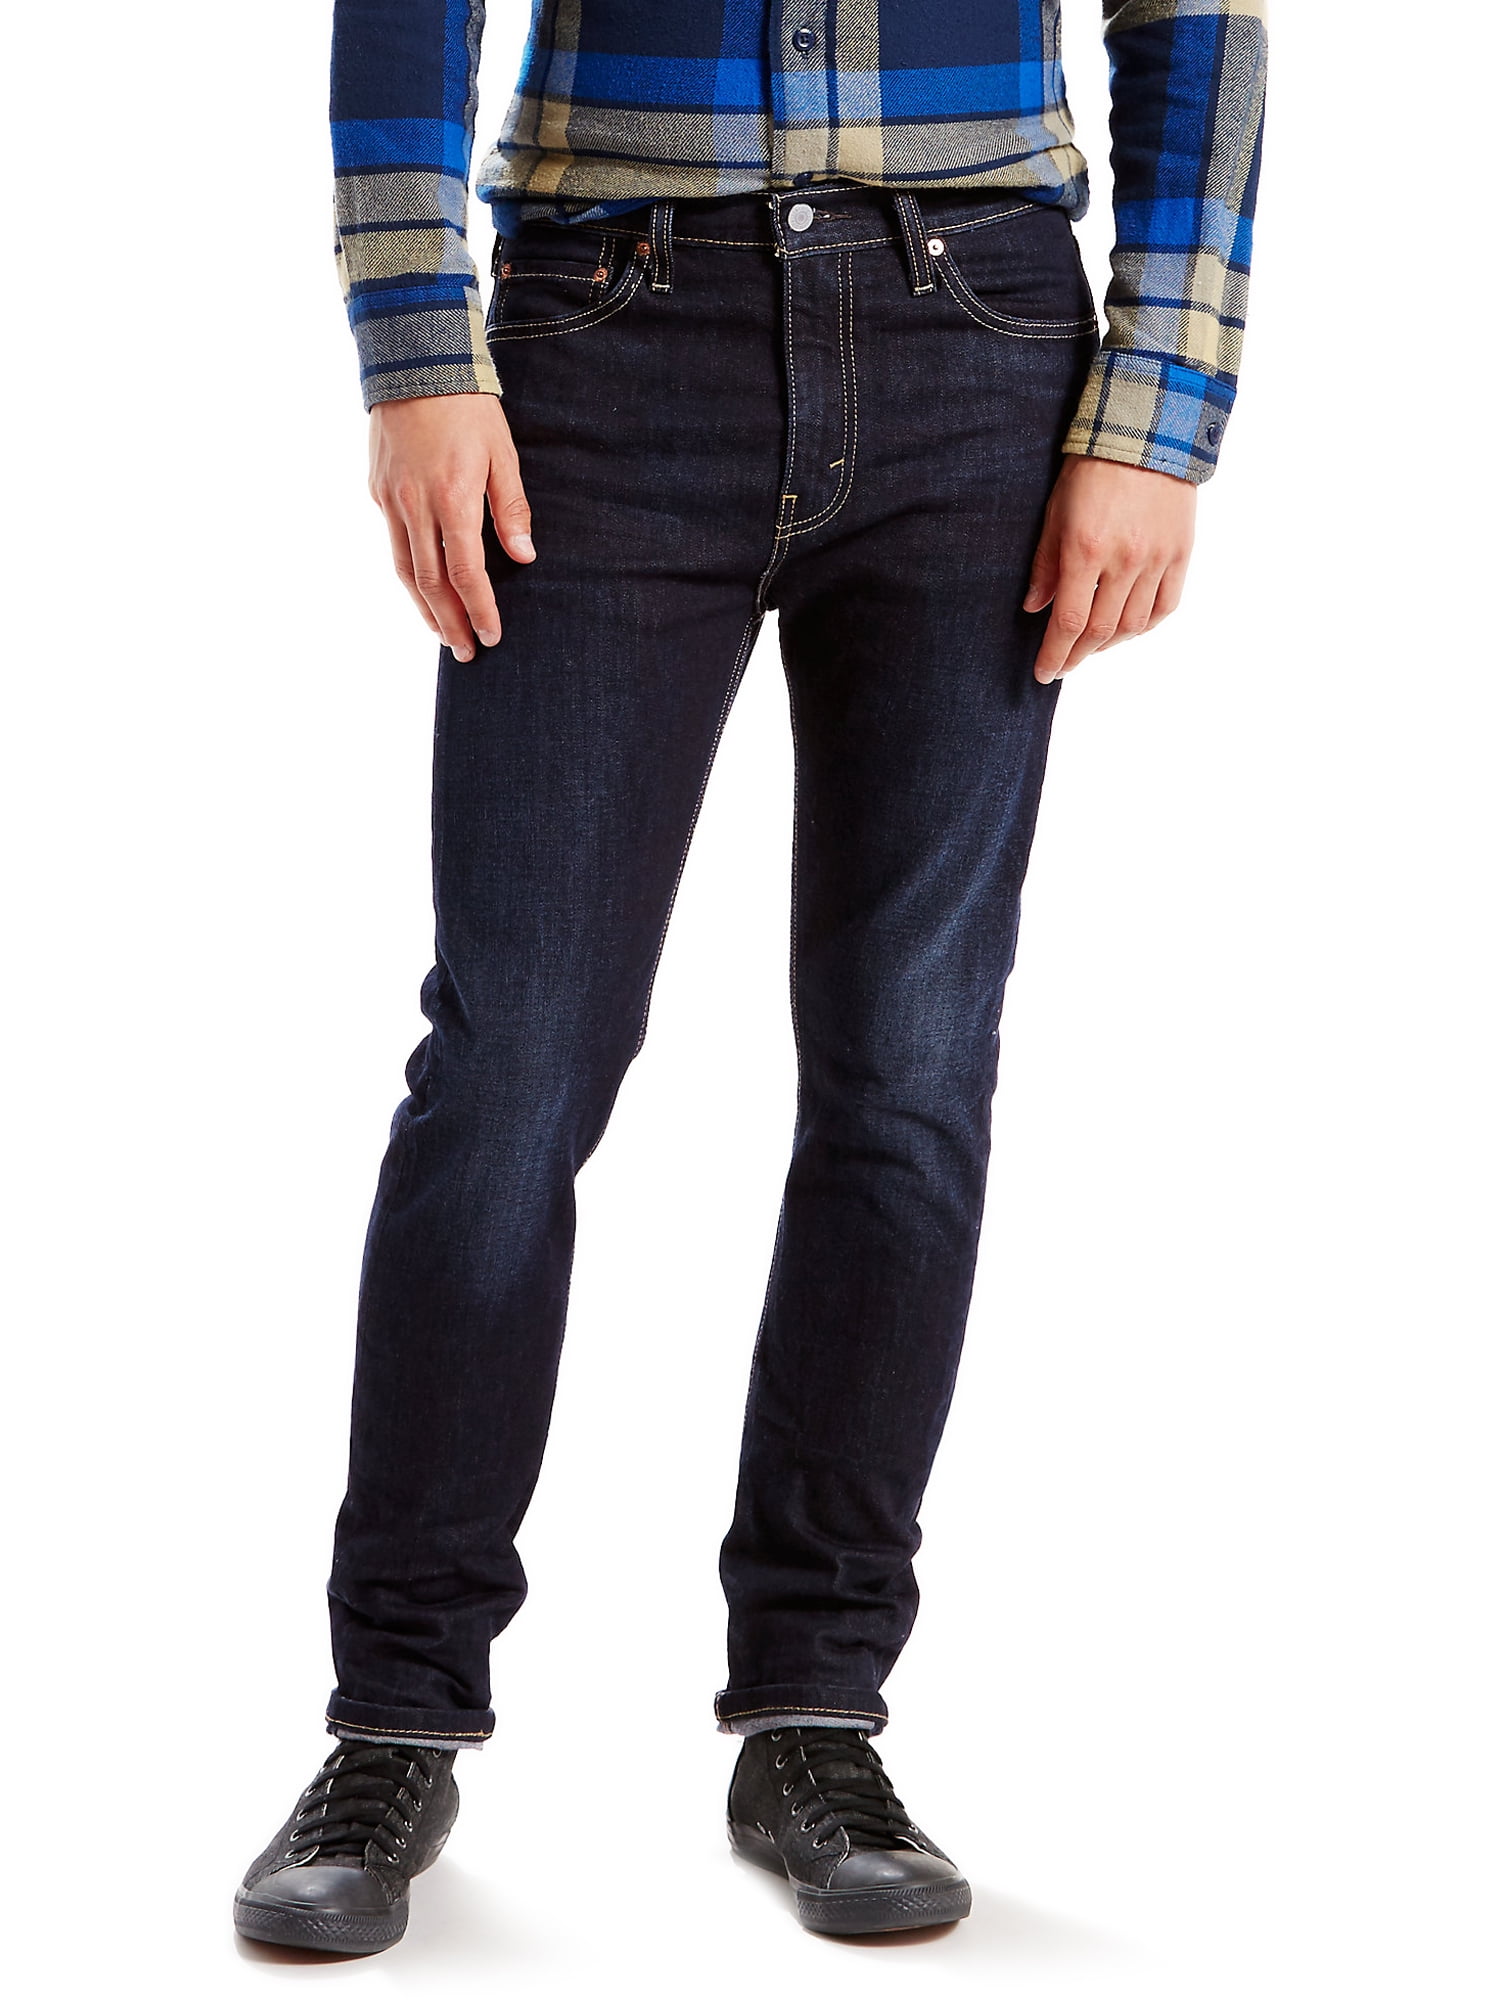 sort Against the will socket Levi's Men's 510 Skinny Fit Jeans - Walmart.com